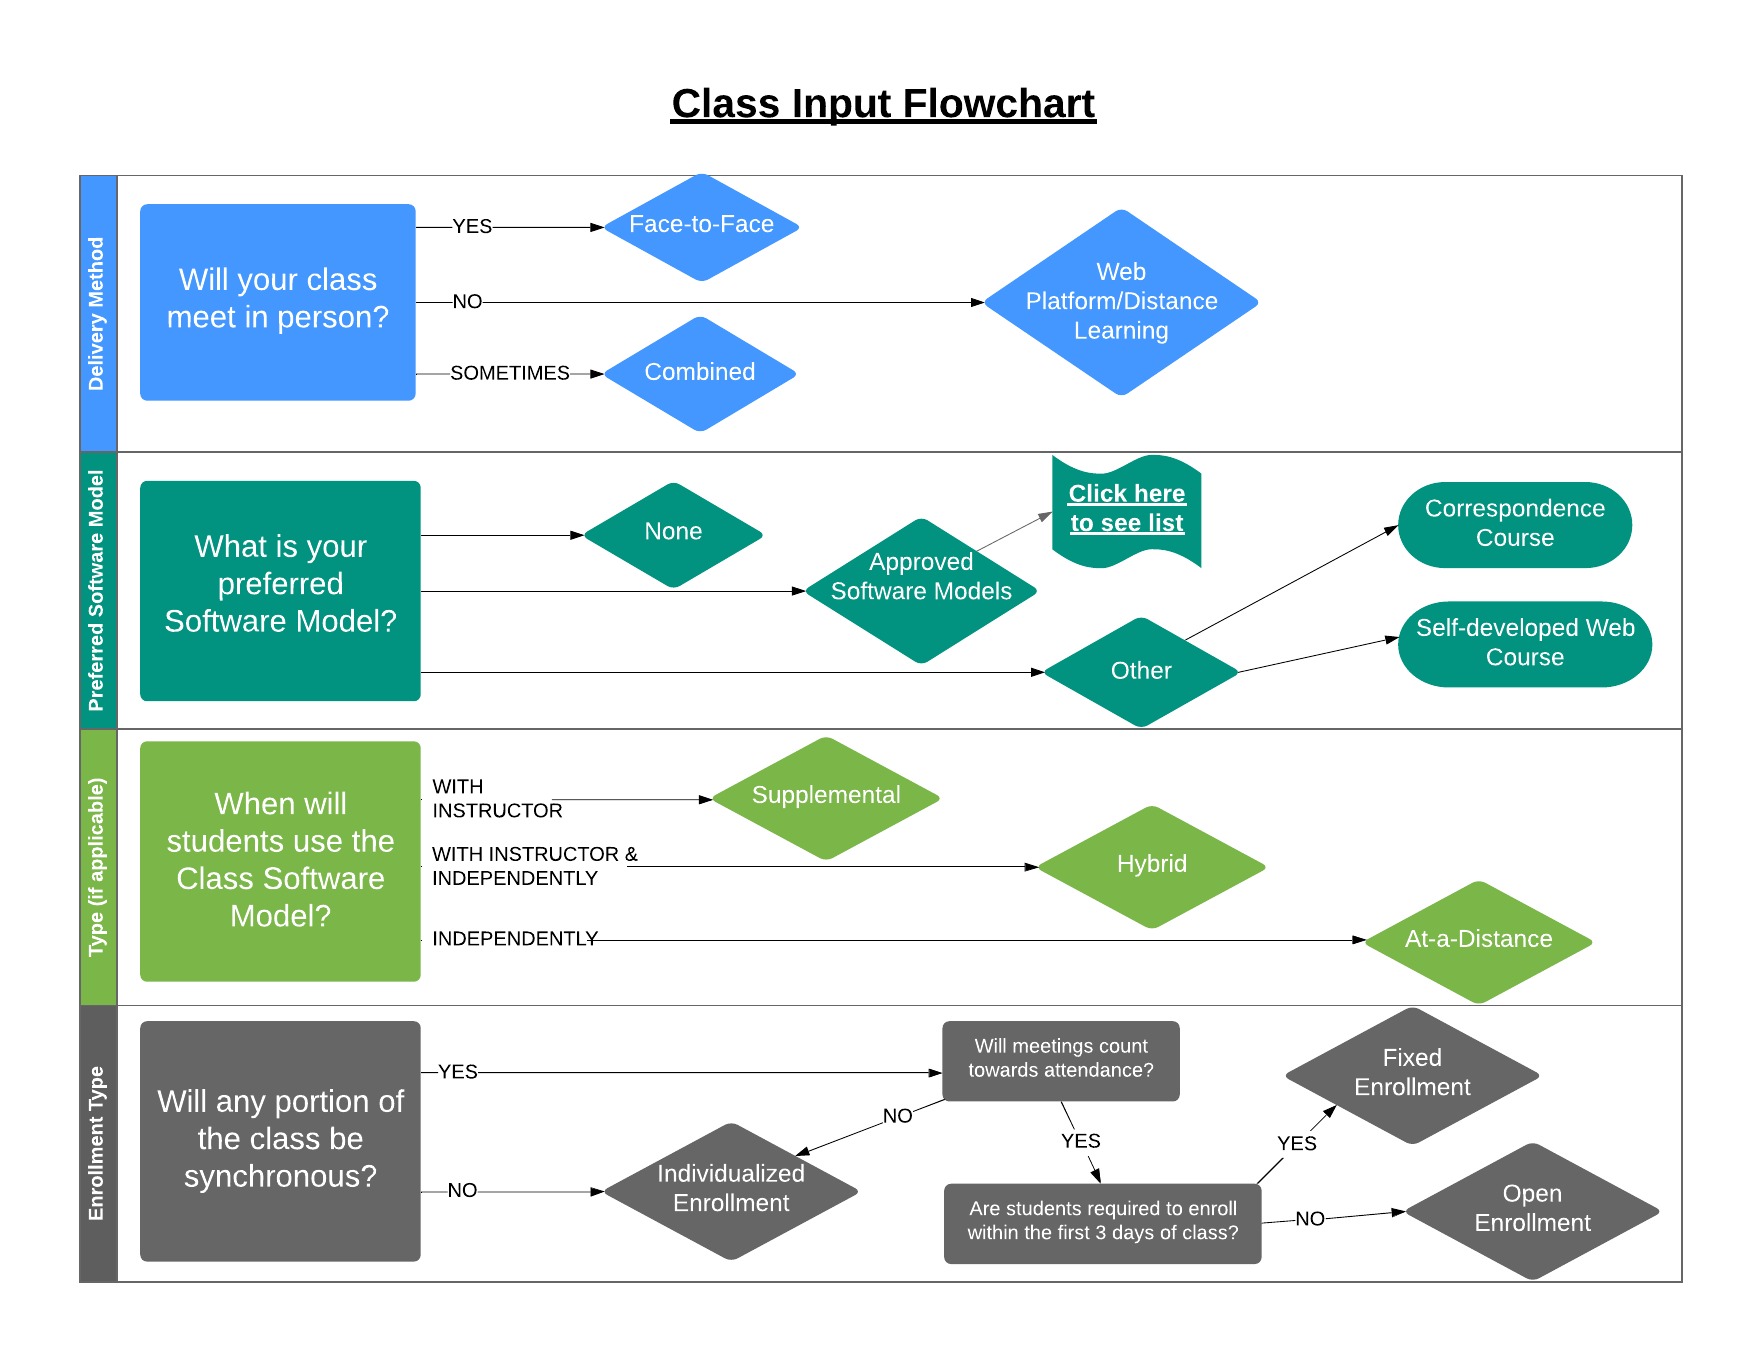 Flowchart explaining how to add a class